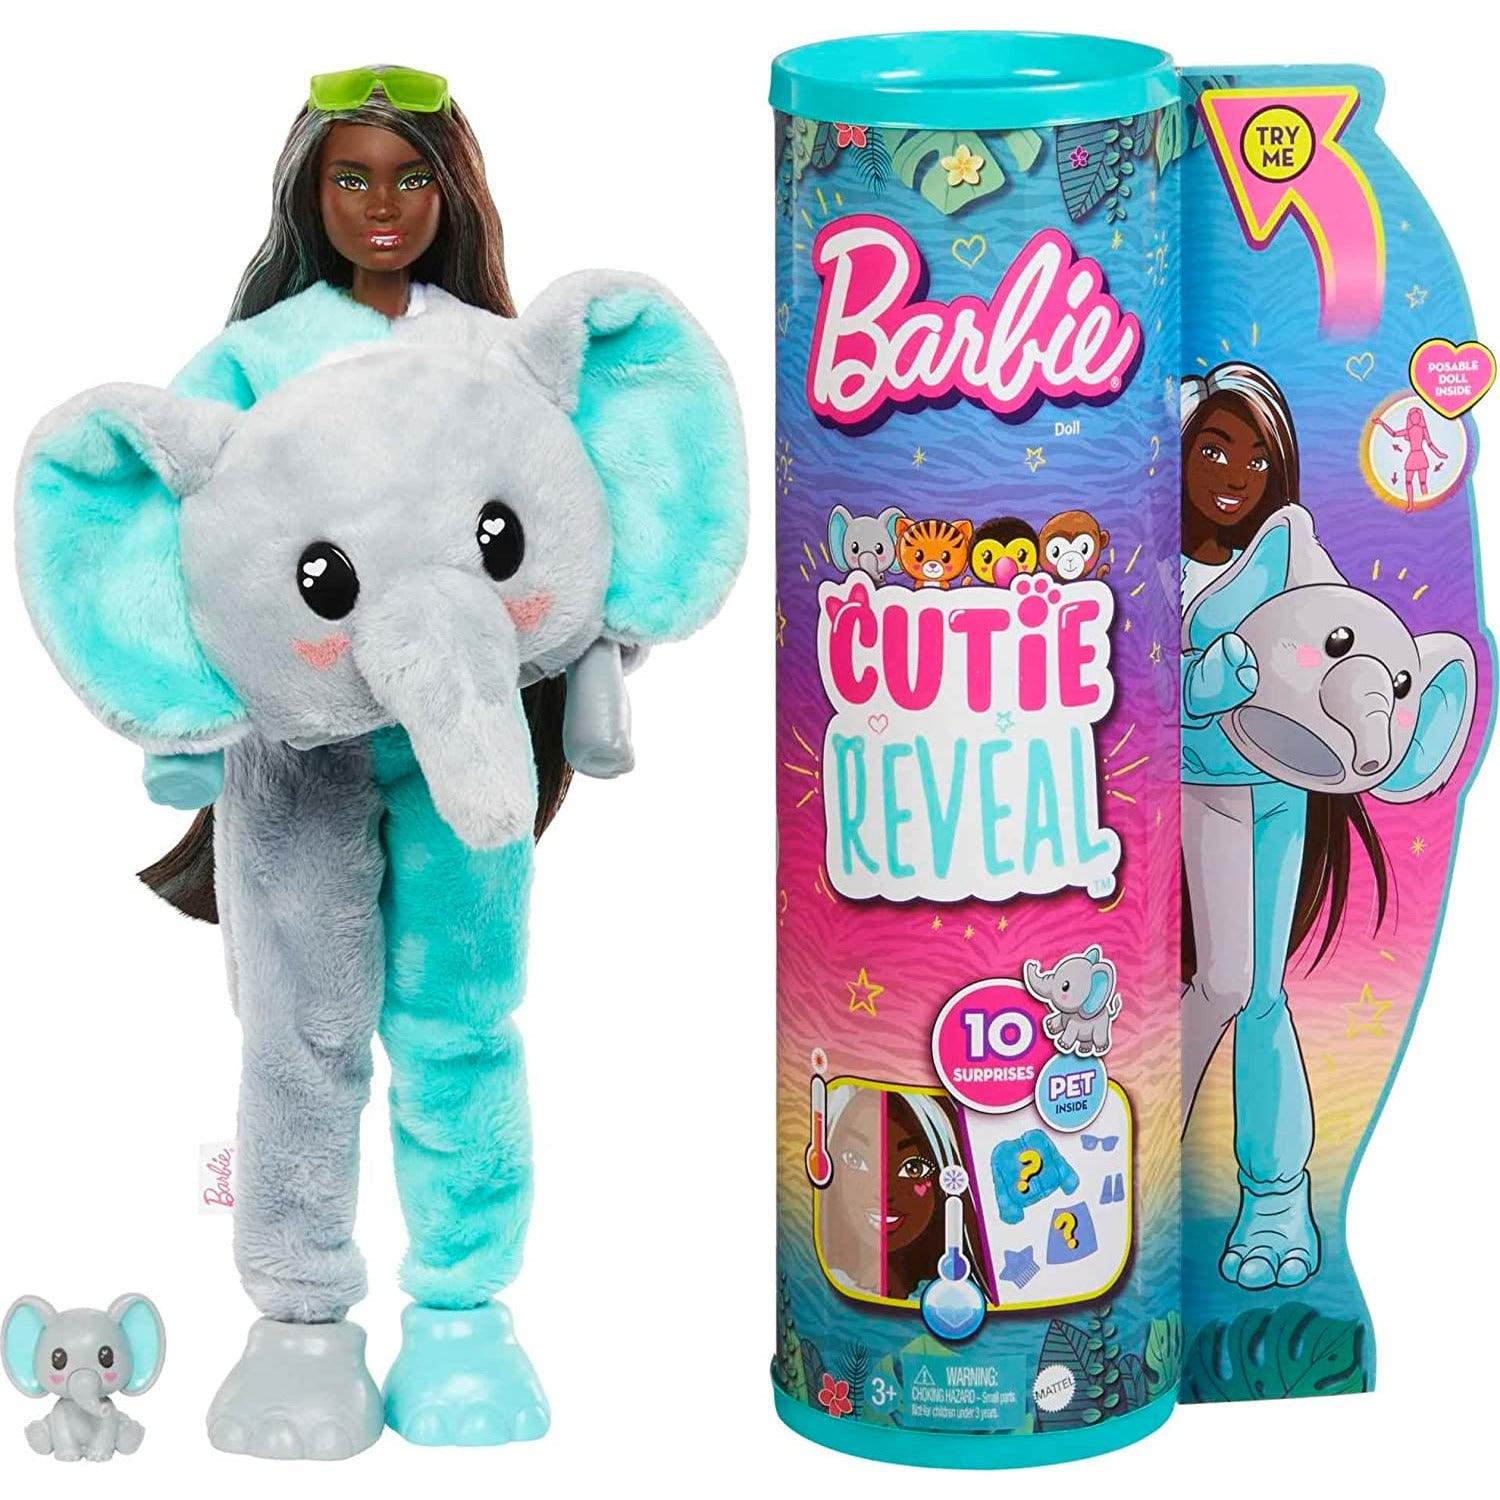 Barbie Cutie Reveal Fashion Doll, Jungle Series Elephant Plush Costume, 10 Surprises Including Mini Pet & Color Change - BumbleToys - 5-7 Years, Barbie, Fashion Dolls & Accessories, Girls, OXE, Pre-Order